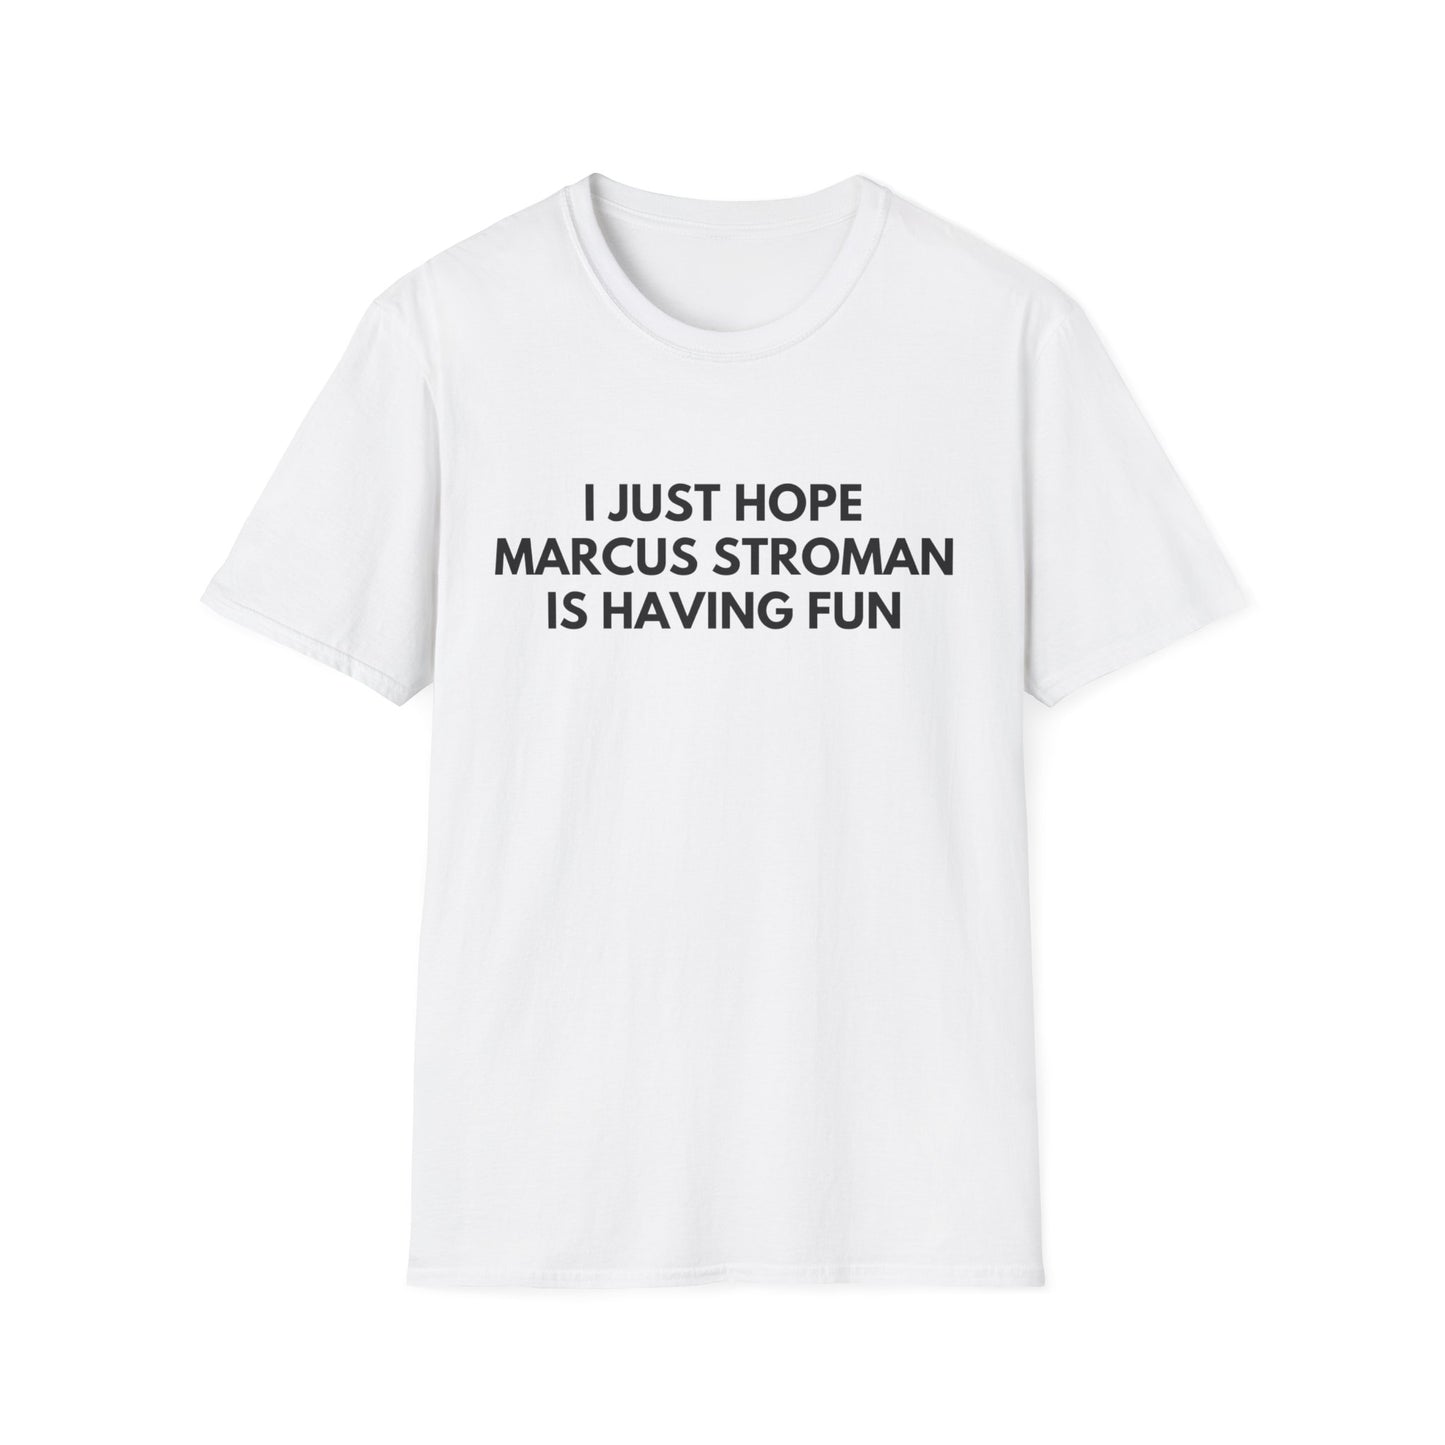 Marcus Stroman Having Fun - Unisex T-shirt